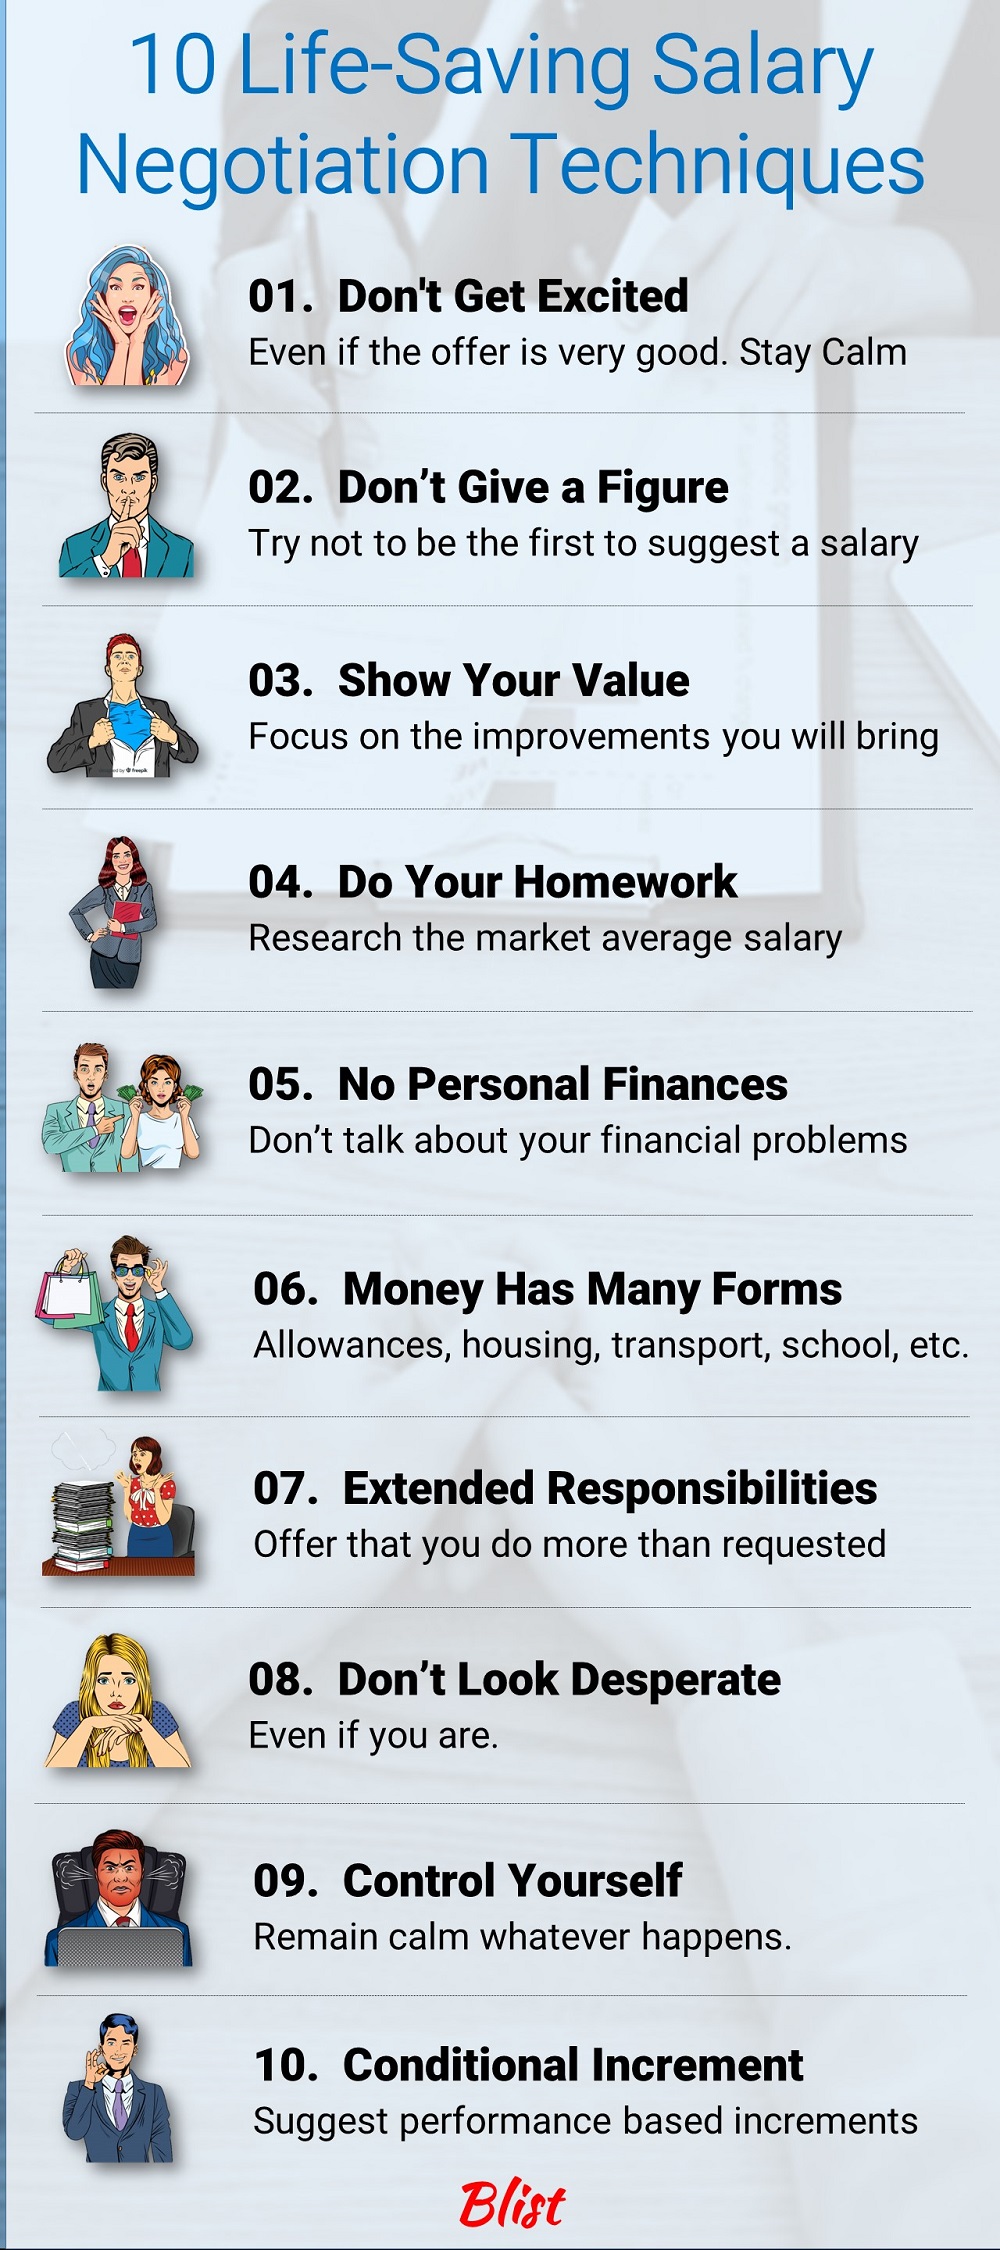 10 Life-Saving Salary Negotiation Tips for Job Seekers